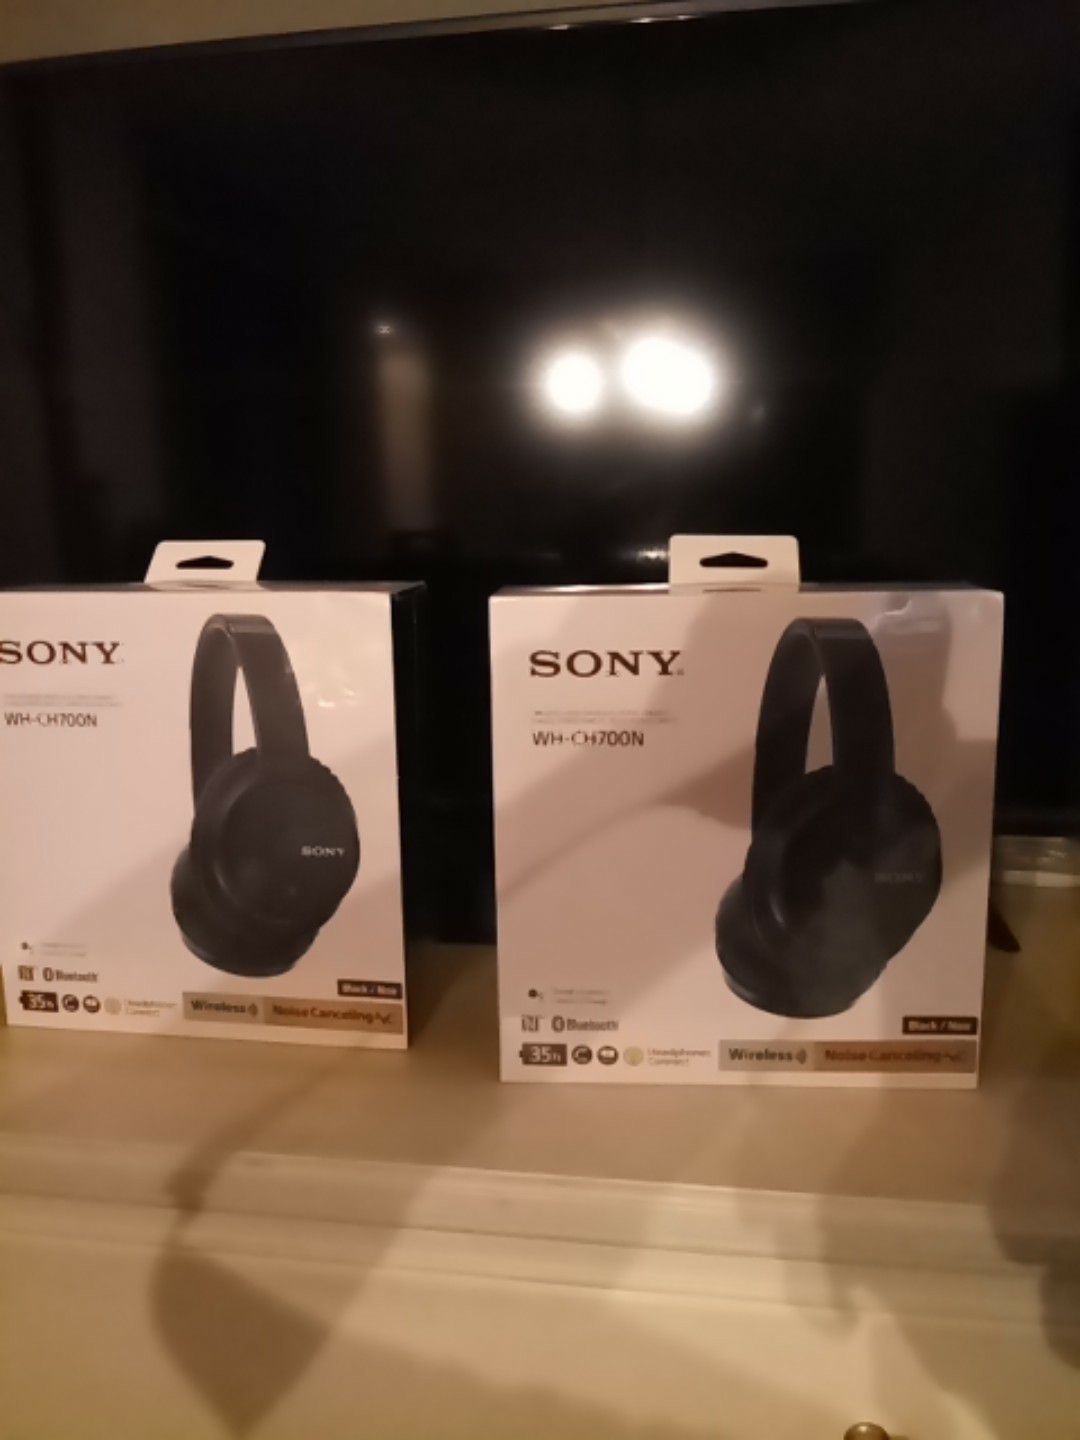 🎧🎧Brand New In Box Never Opened Sony Bluetooth Headphones $100 pair🎧🎧